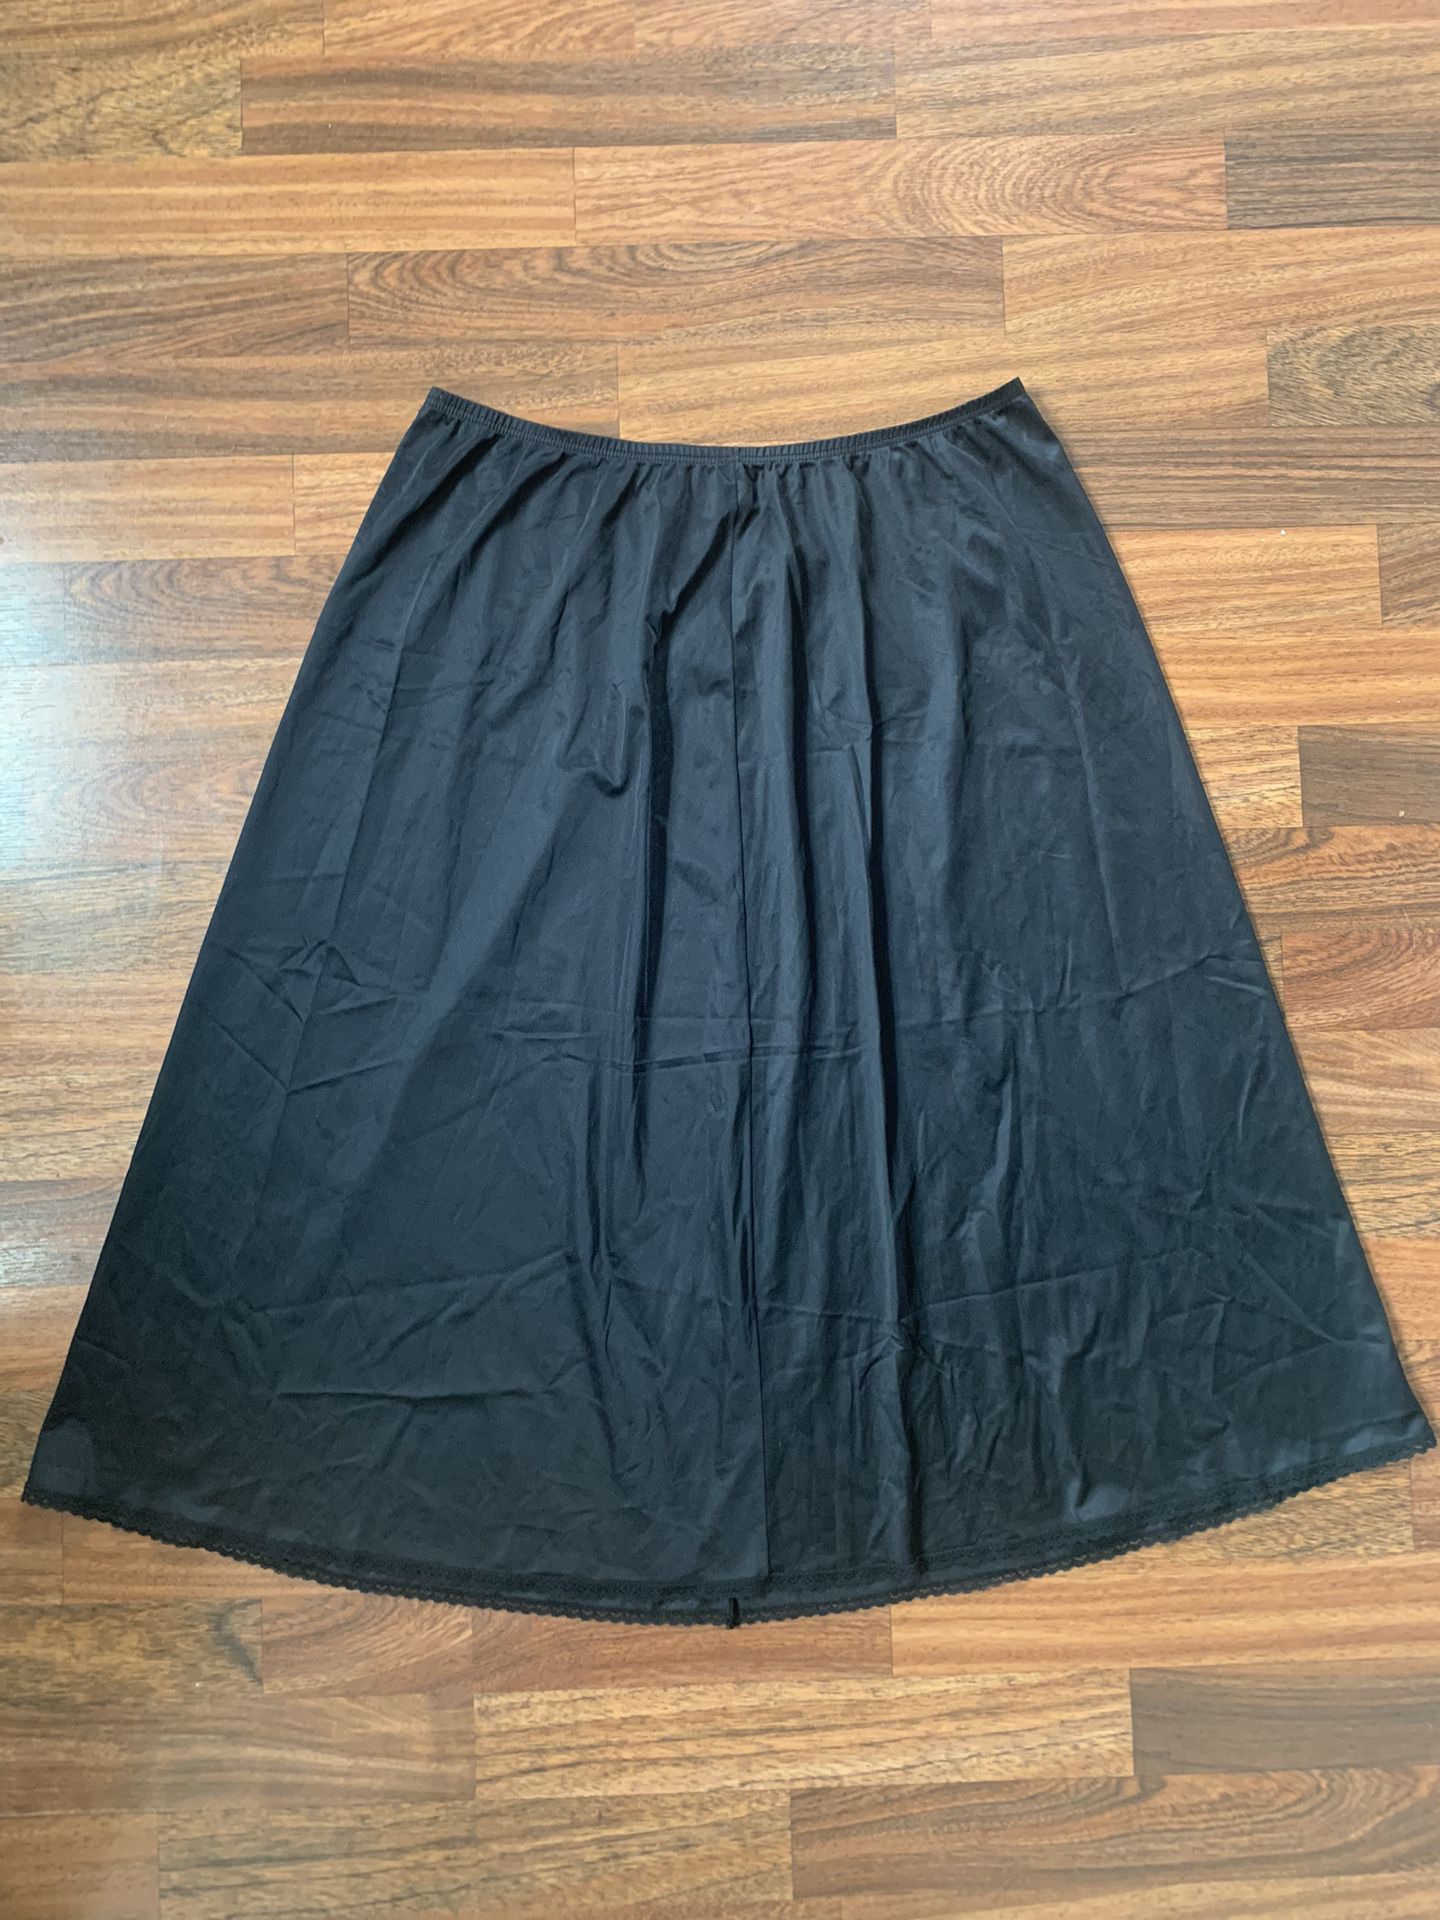 Vanity Fair size XL Black Nylon Skirt Slip dainty lace trim 